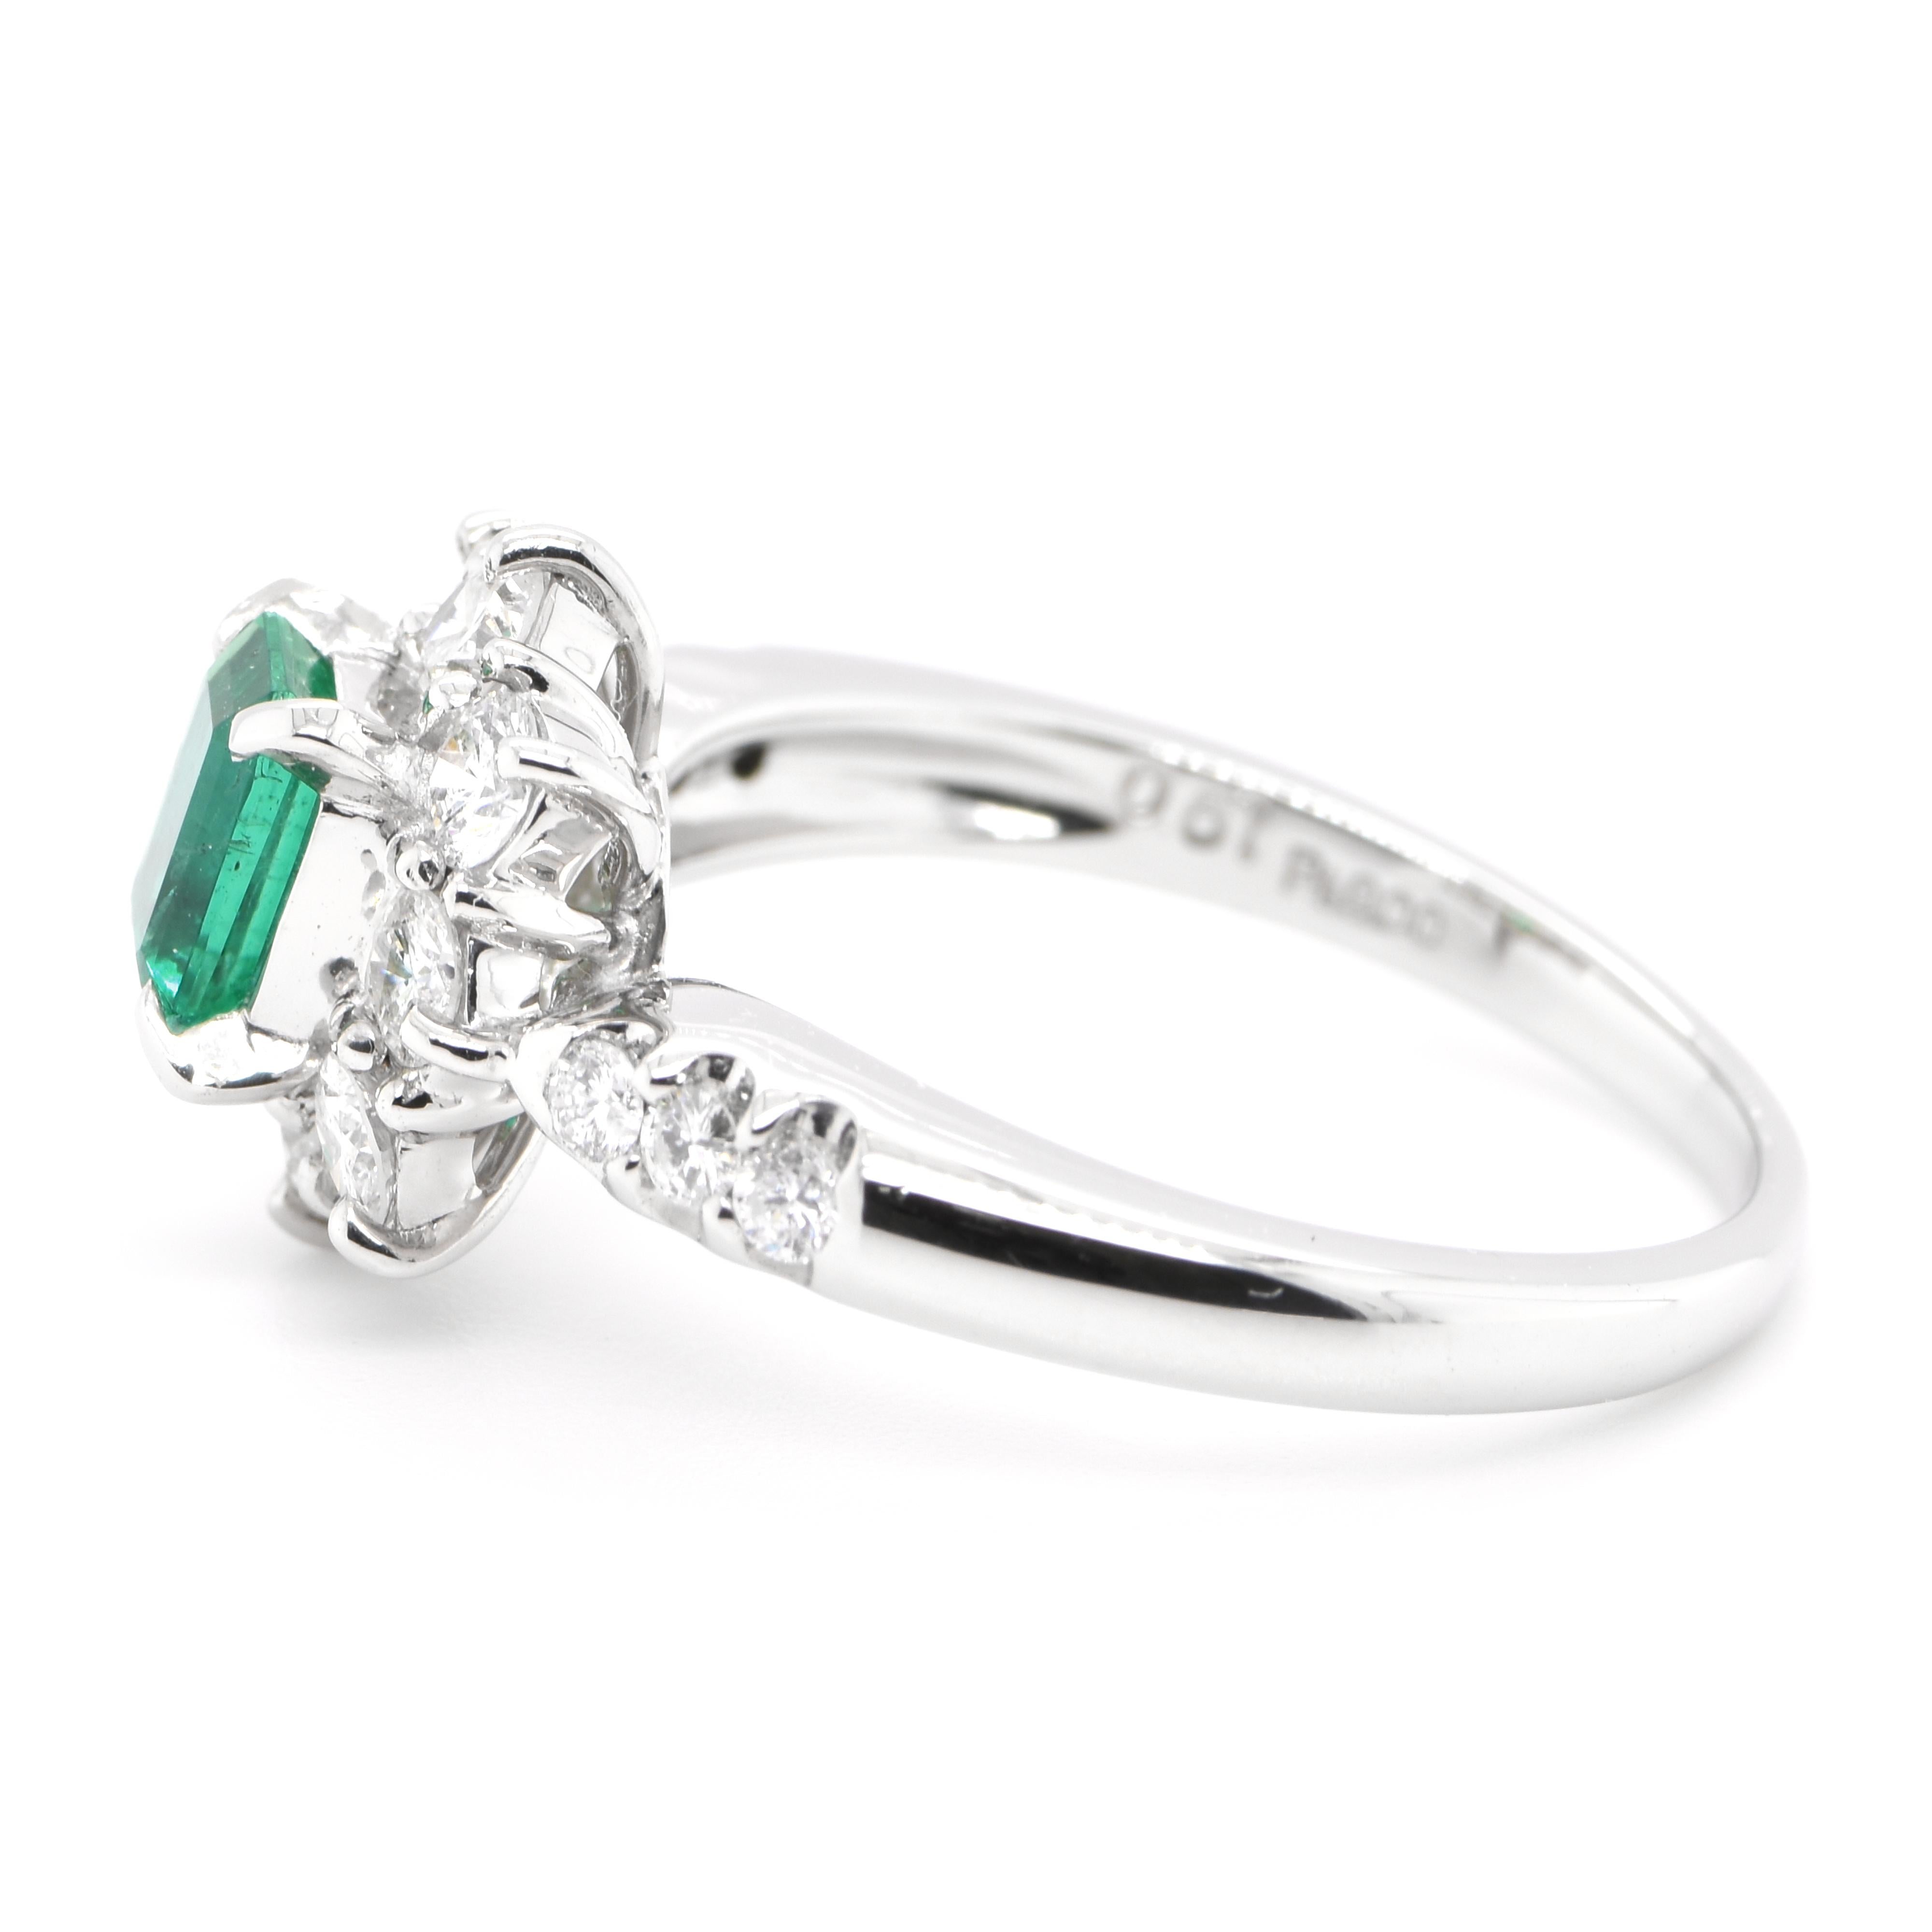 Emerald Cut 0.61 Carat Natural Emerald and Diamond Ring Set in Platinum